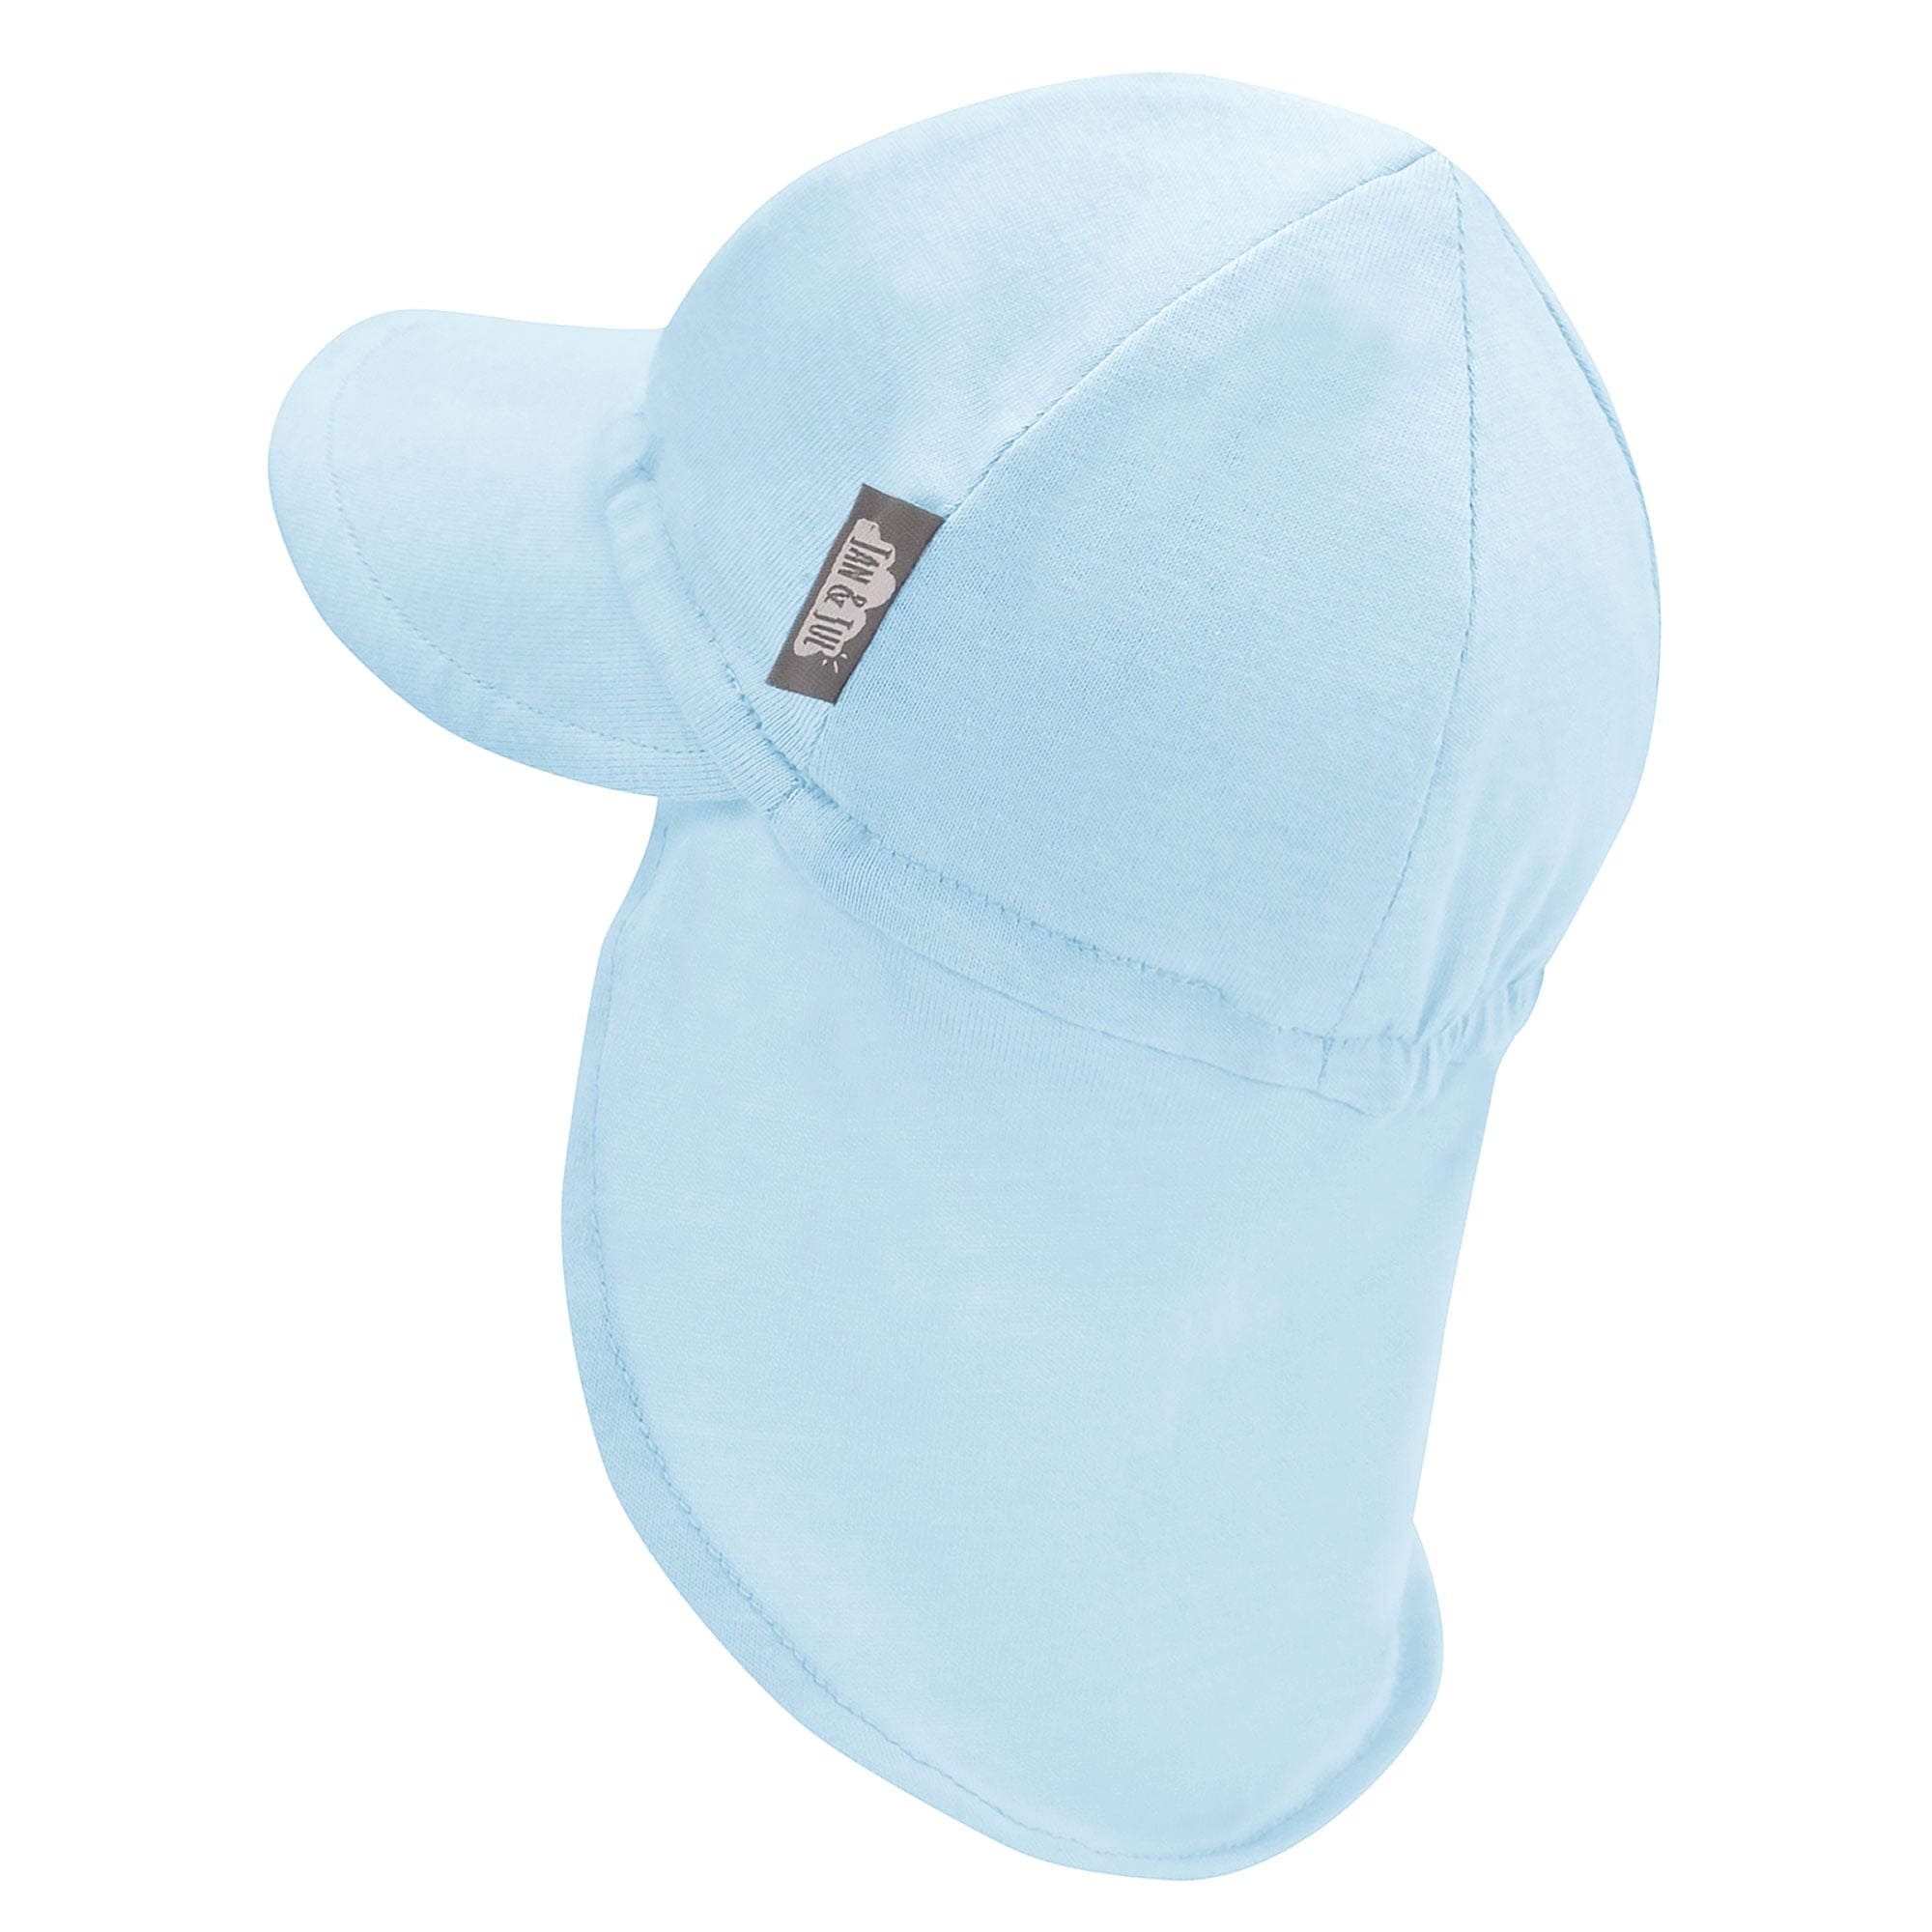 JAN & JUL Baby Sun-Hat for Newborn Boys with Neck Flap (Baby Blue